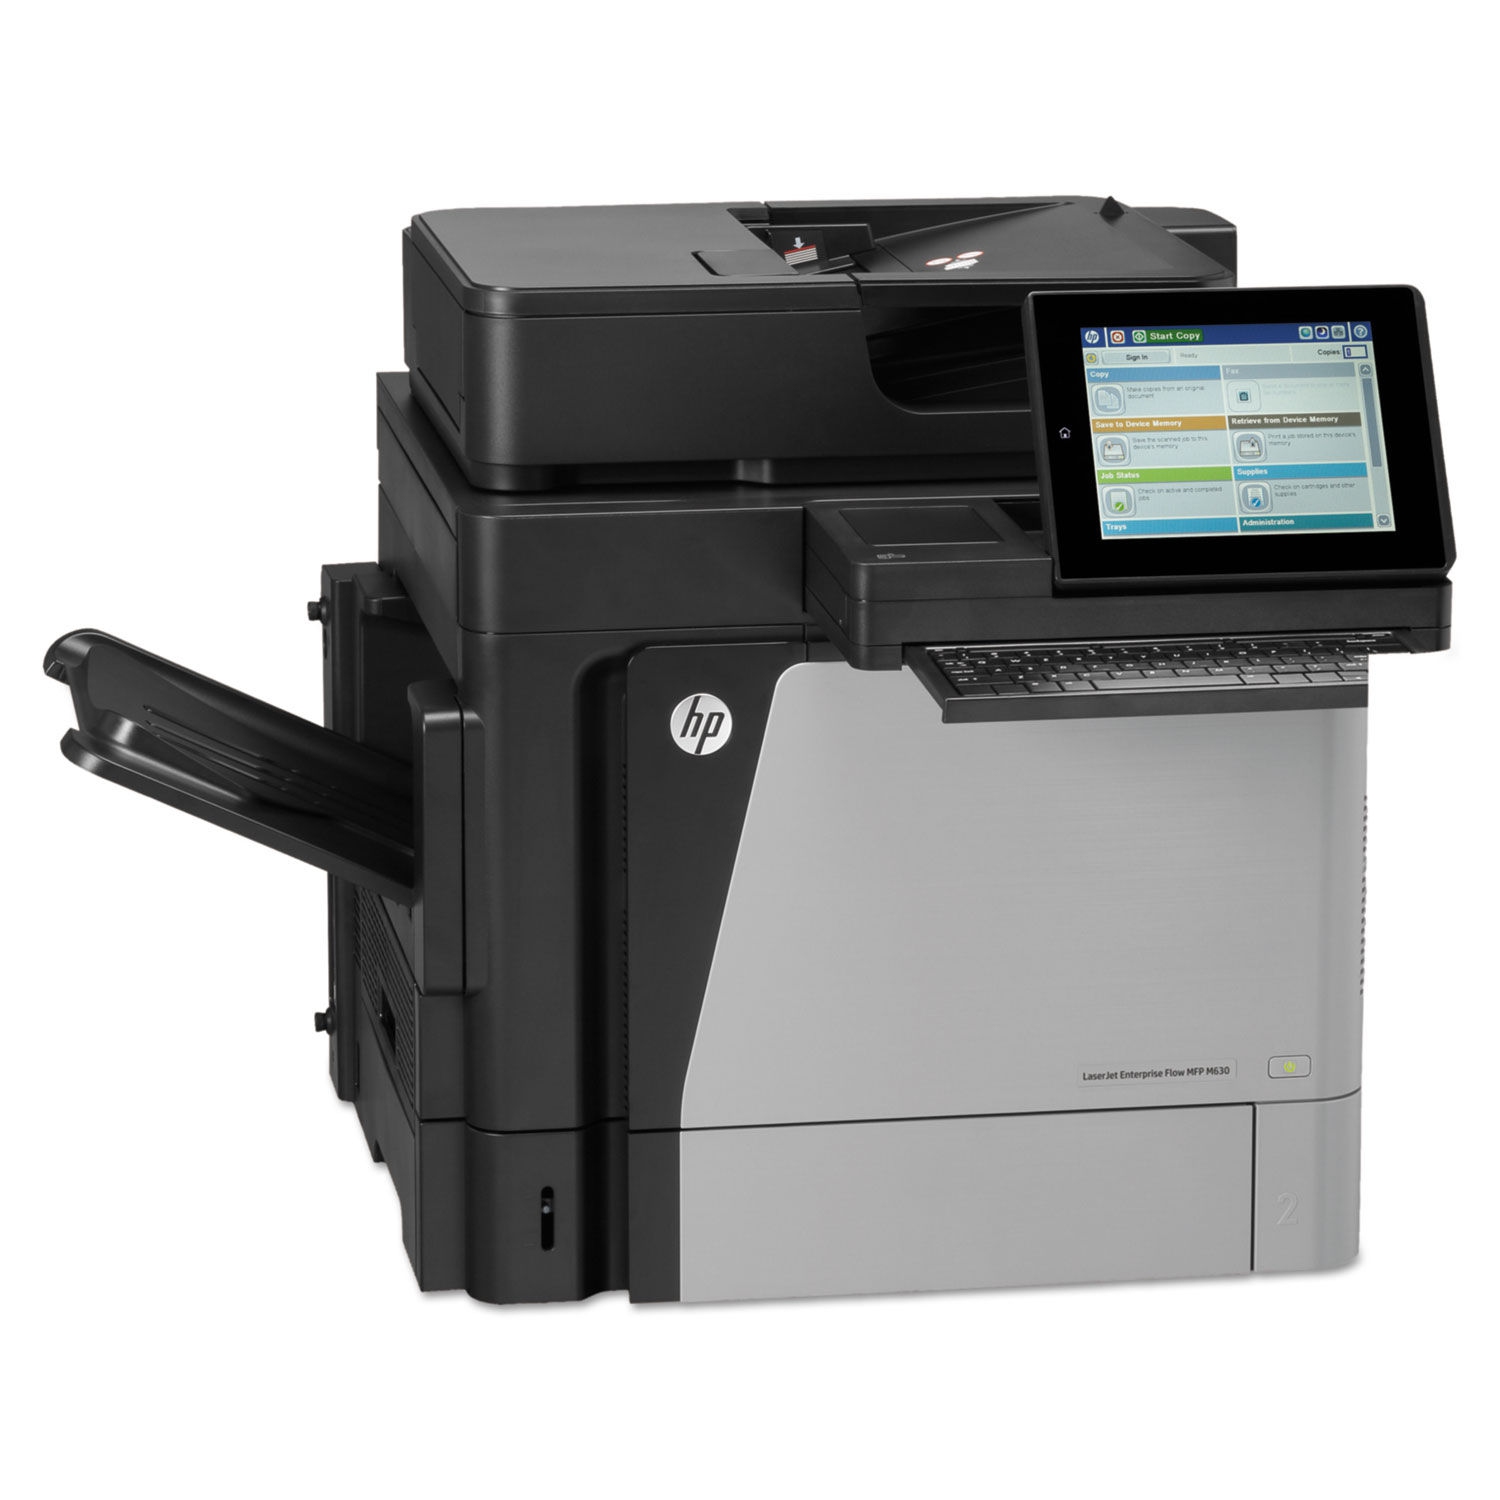 Refurbished (Good) HP LaserJet Enterprise MFP M630h Multifunction Printer Copier Fax Scanner J7X28A Parallel, No Duplex, With existing Toner